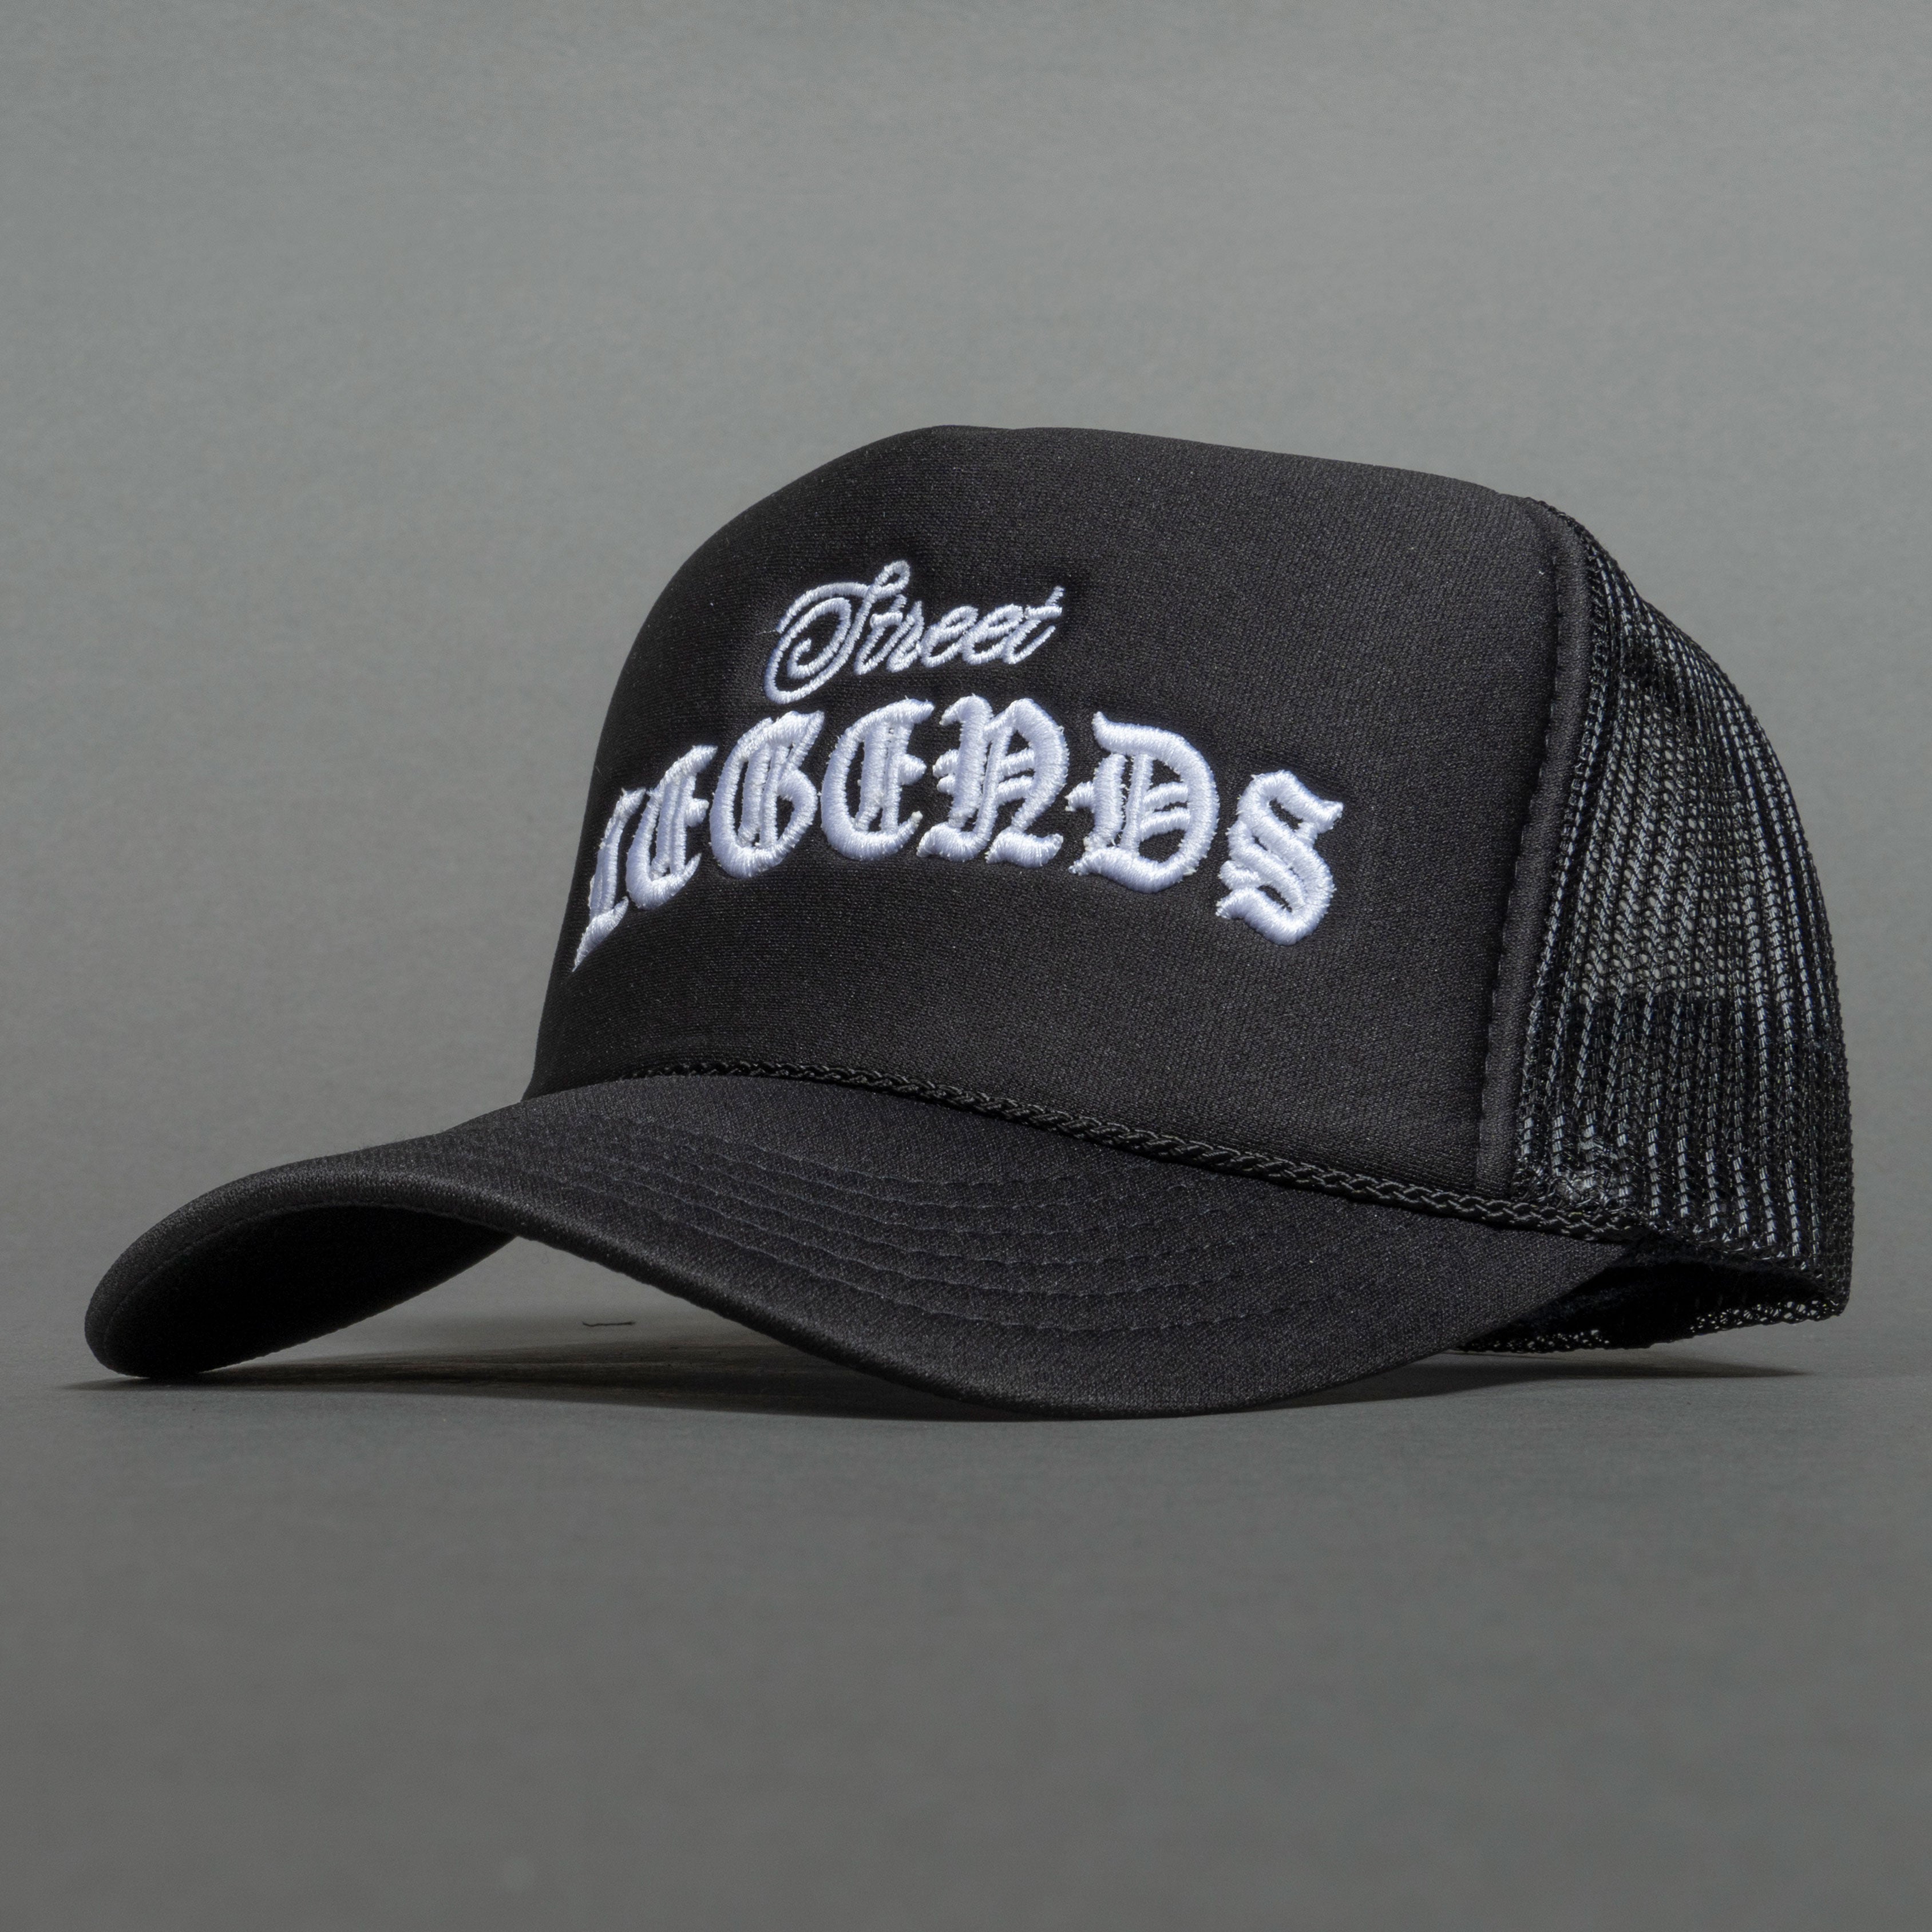 Street Legends Trucker Hat